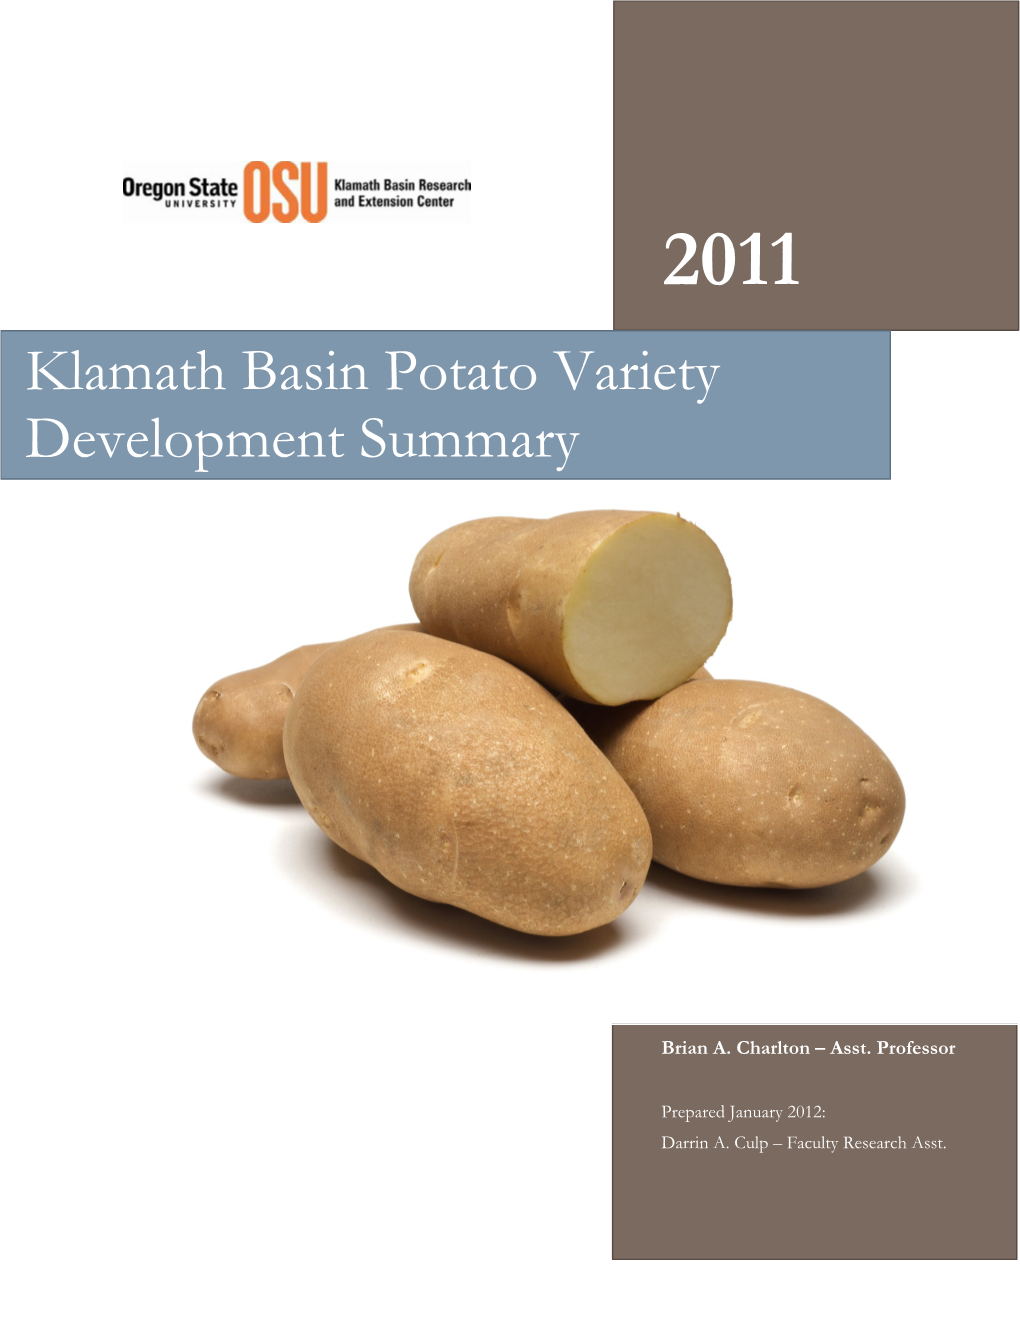 Klamath Basin Potato Variety Development Summary